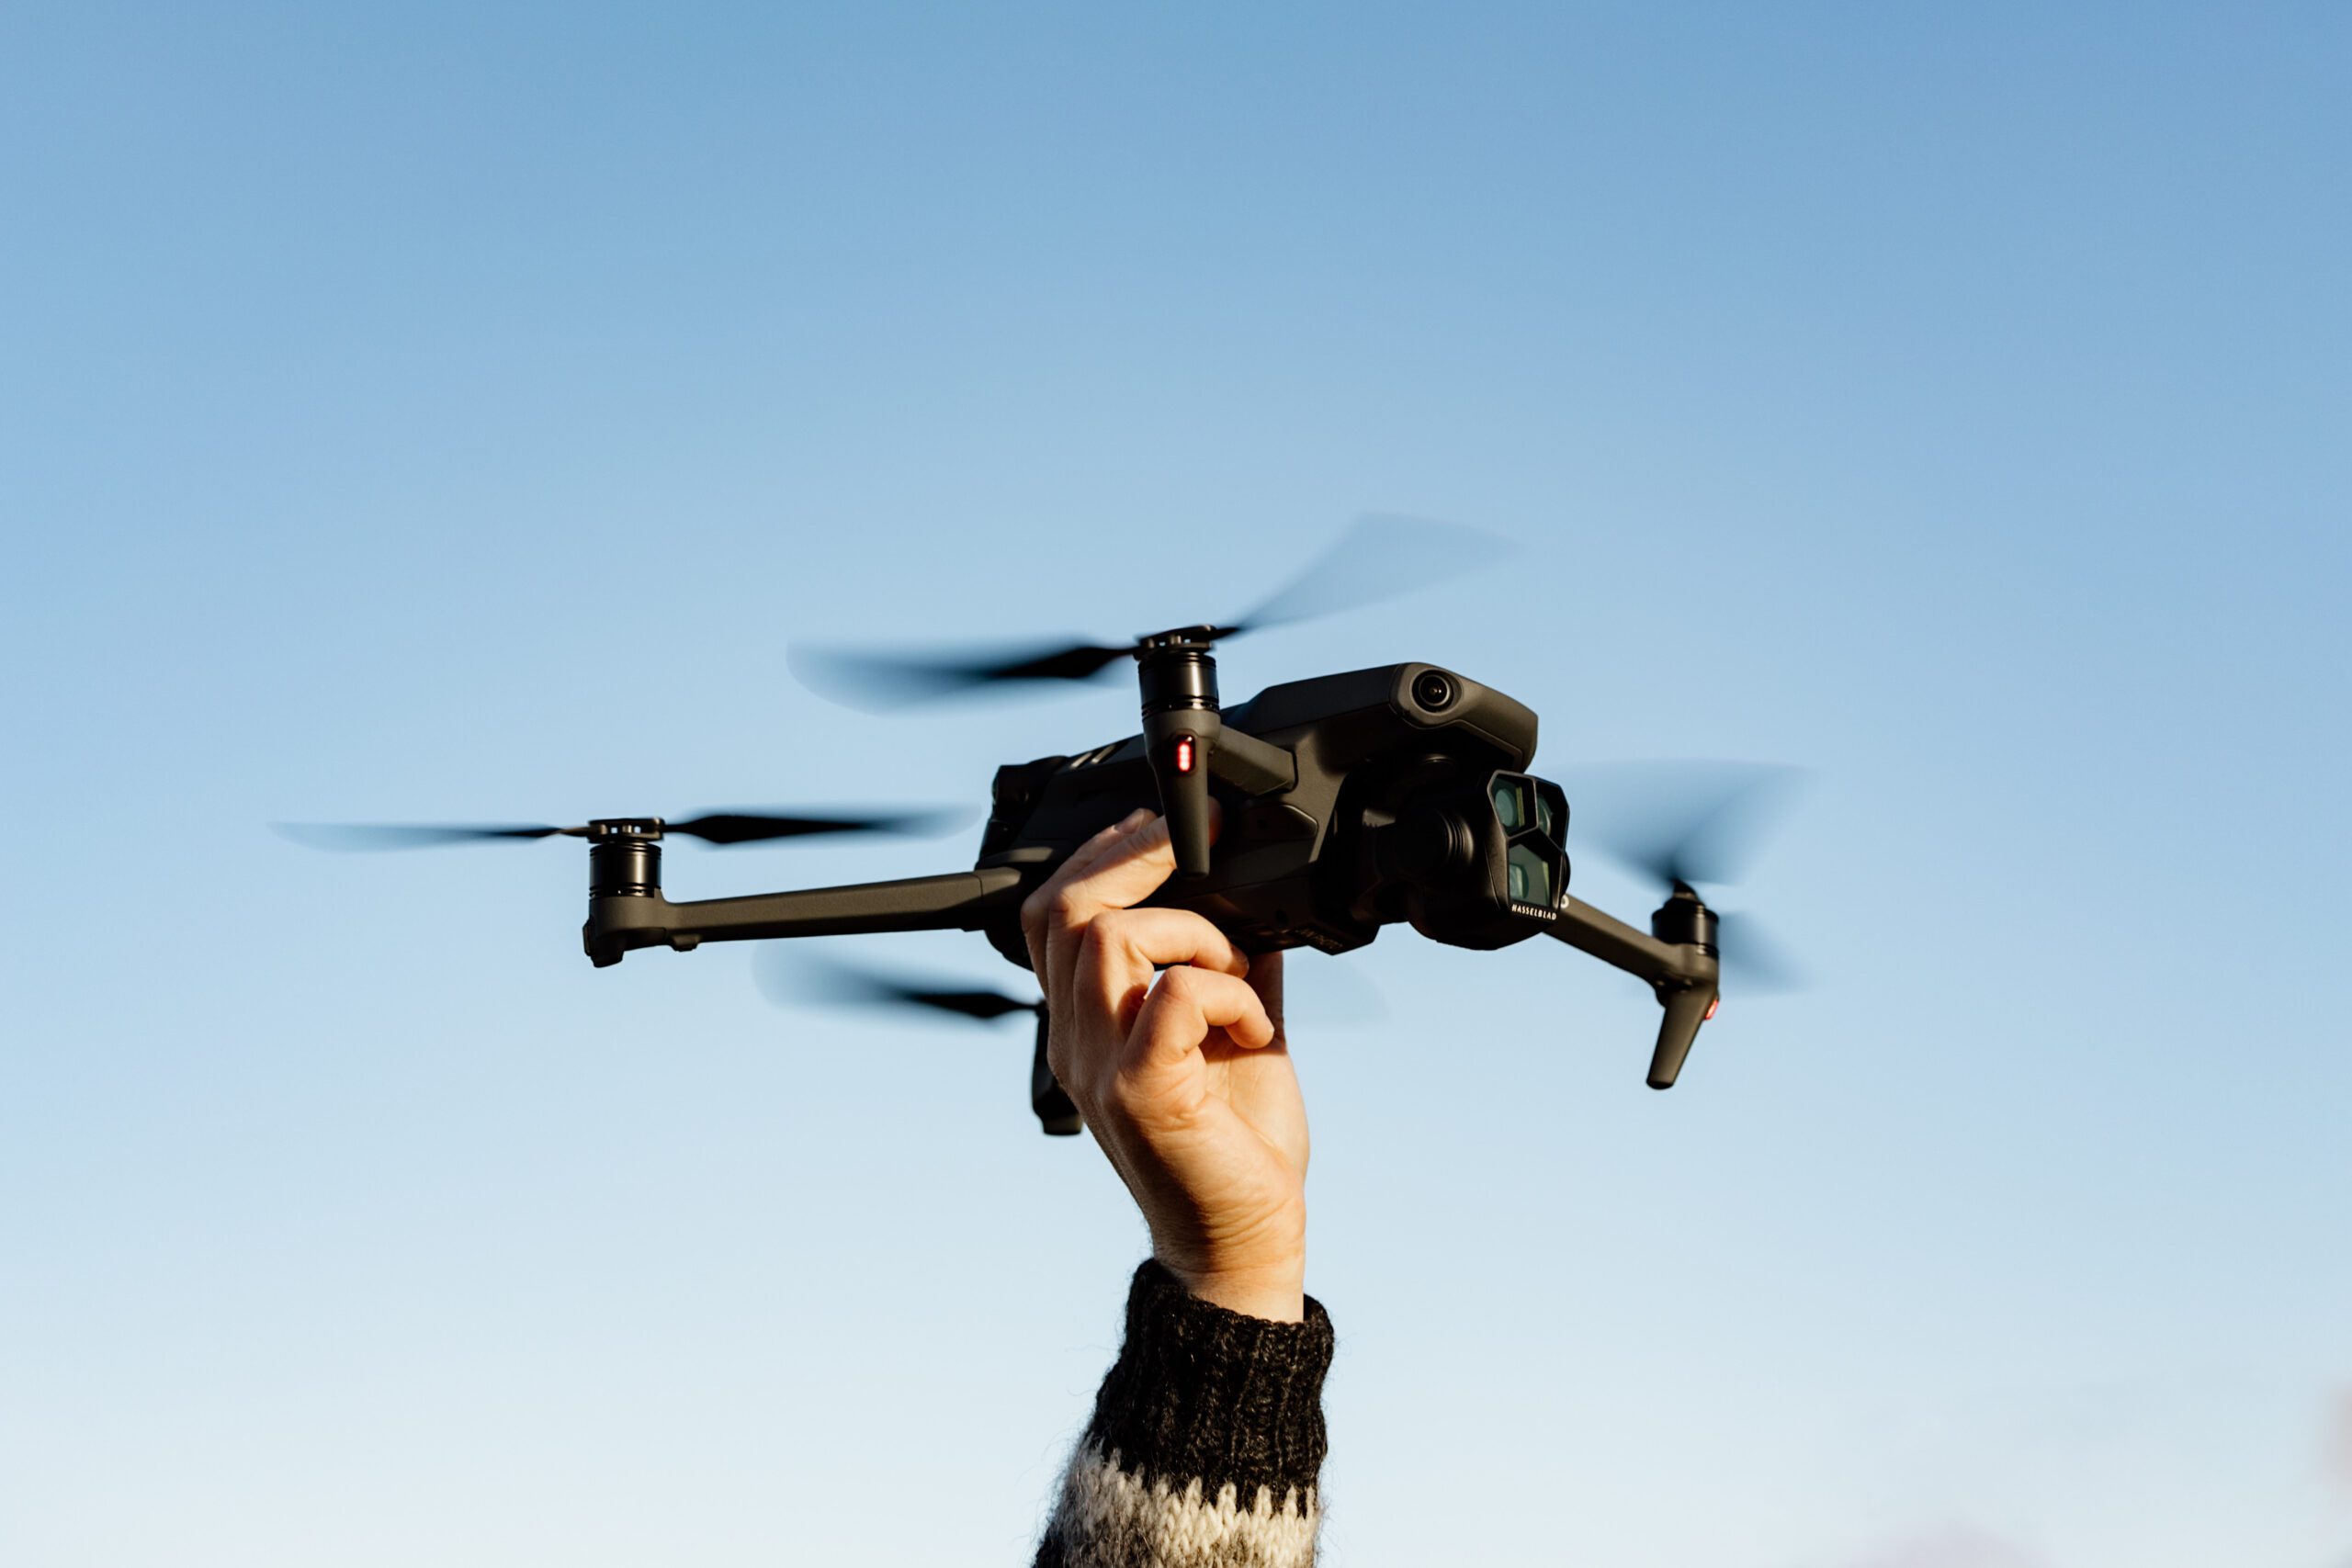 Mavic 3 Pro drone test